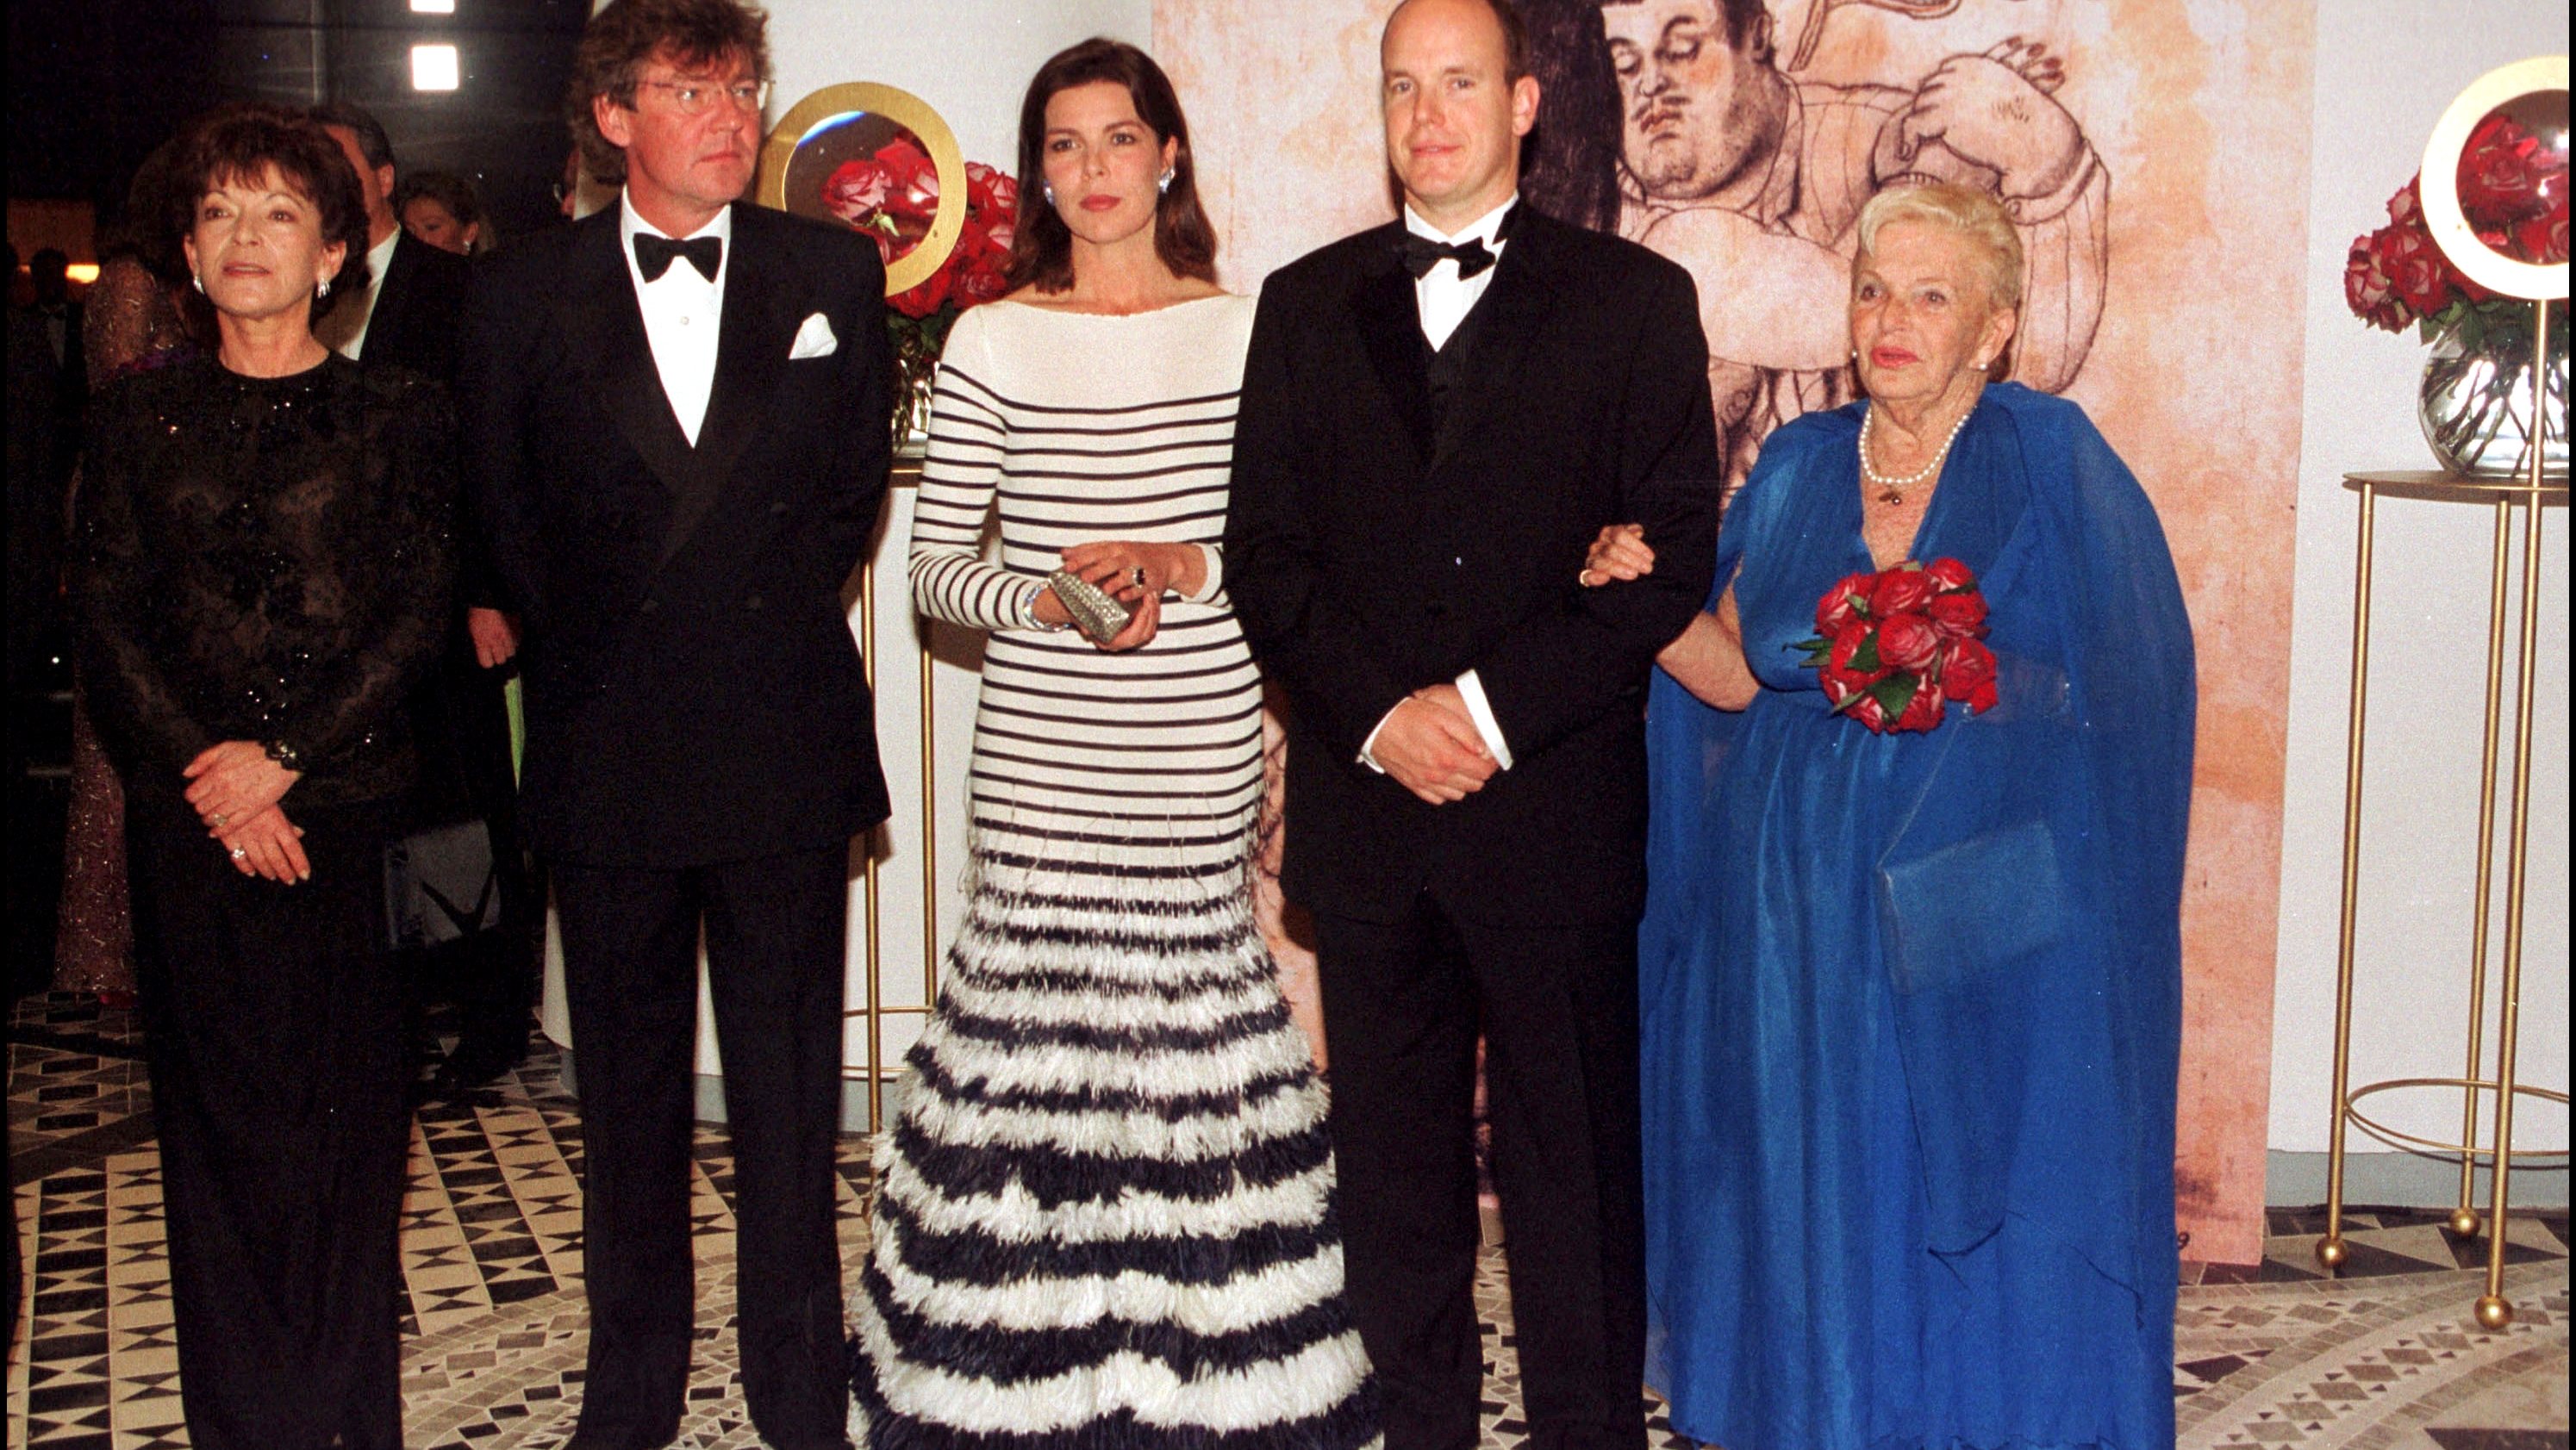 Prince Albert And Princess Caroline Open The Ball Of La Rose 2000 in Monaco on March 25, 2000.